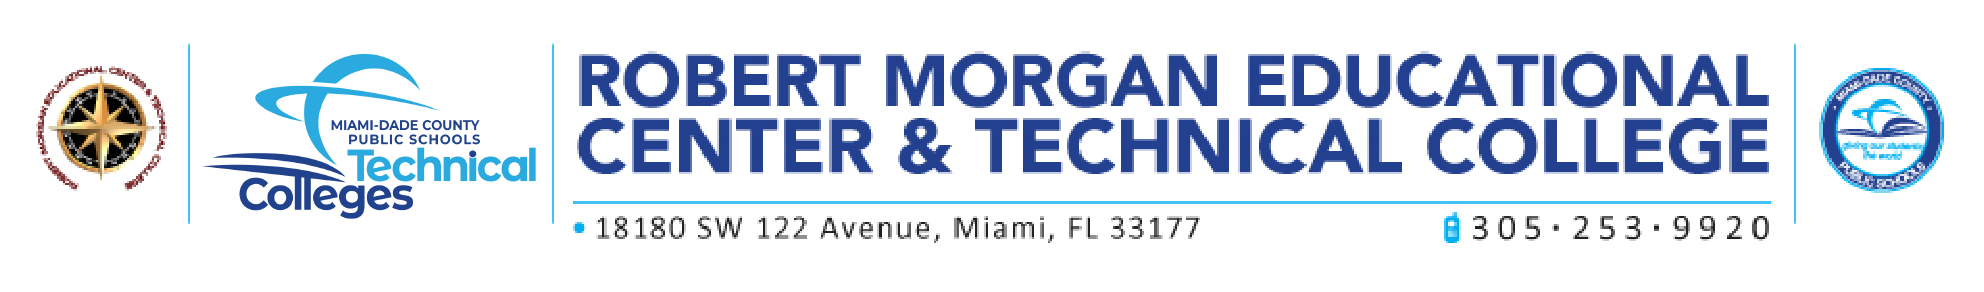 Robert Morgan Educational Center & Technical College